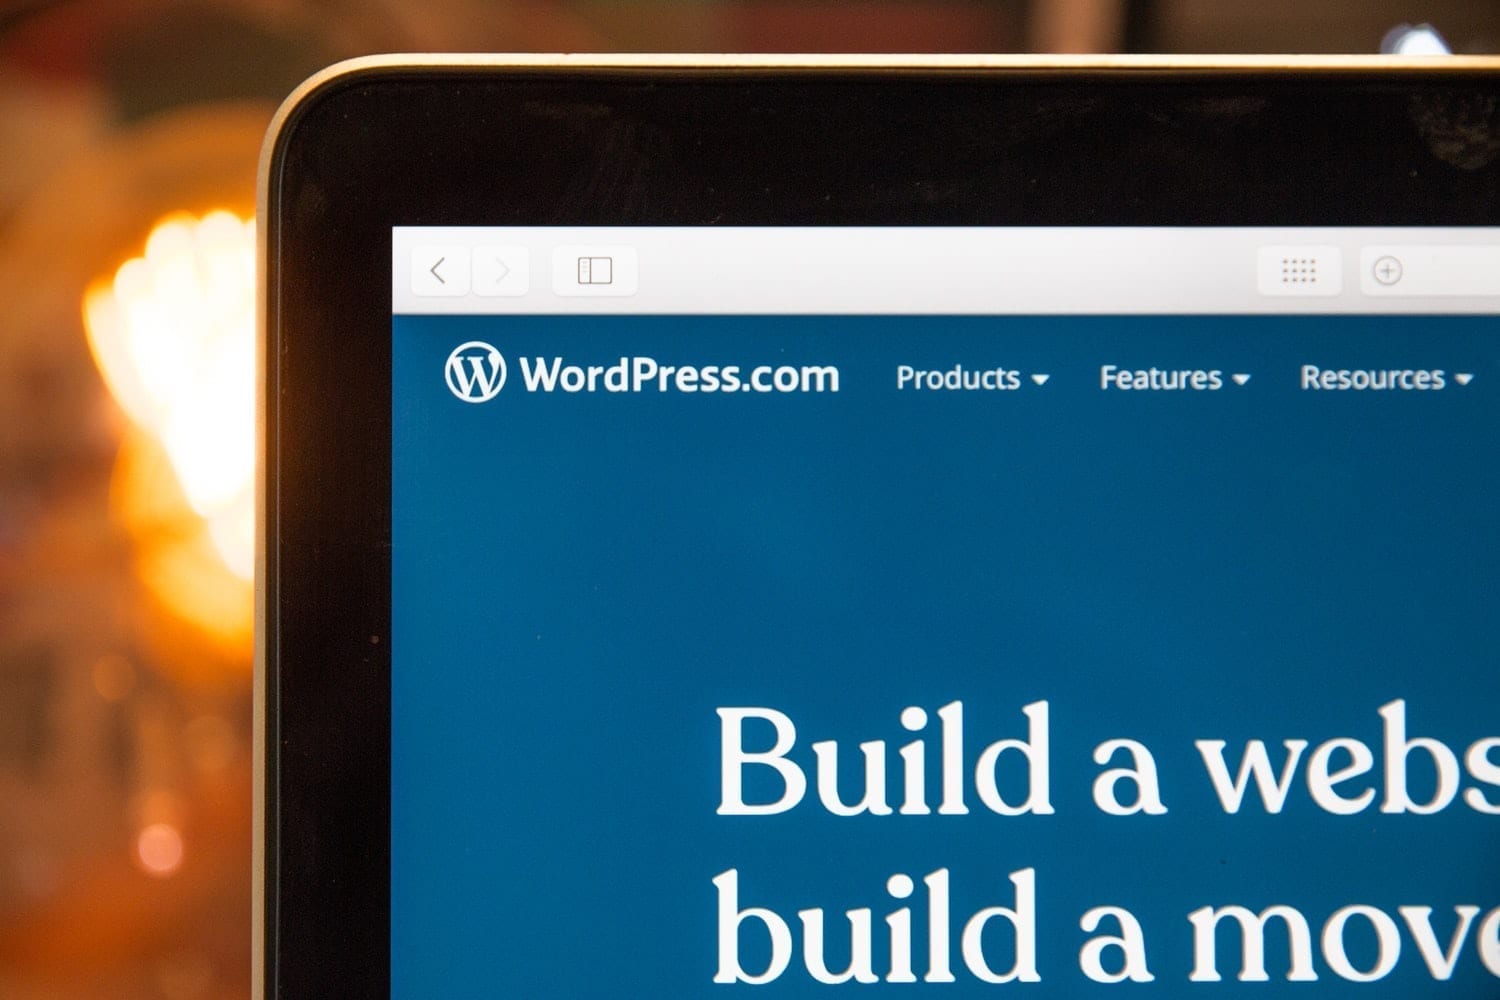 WordPress.com versus WordPress.org: Which Should You Use?